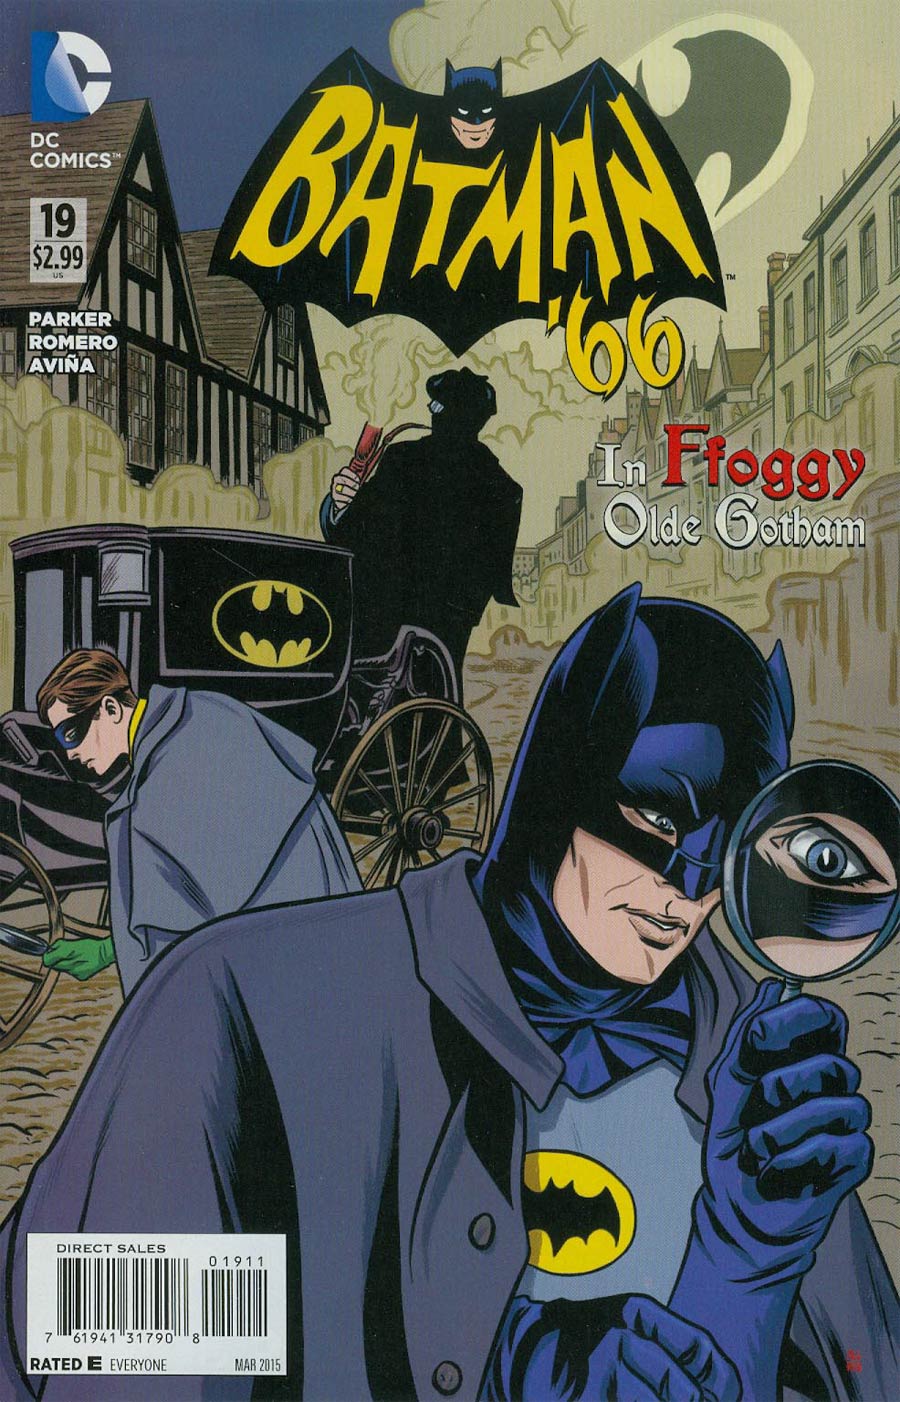 Batman 66 #19